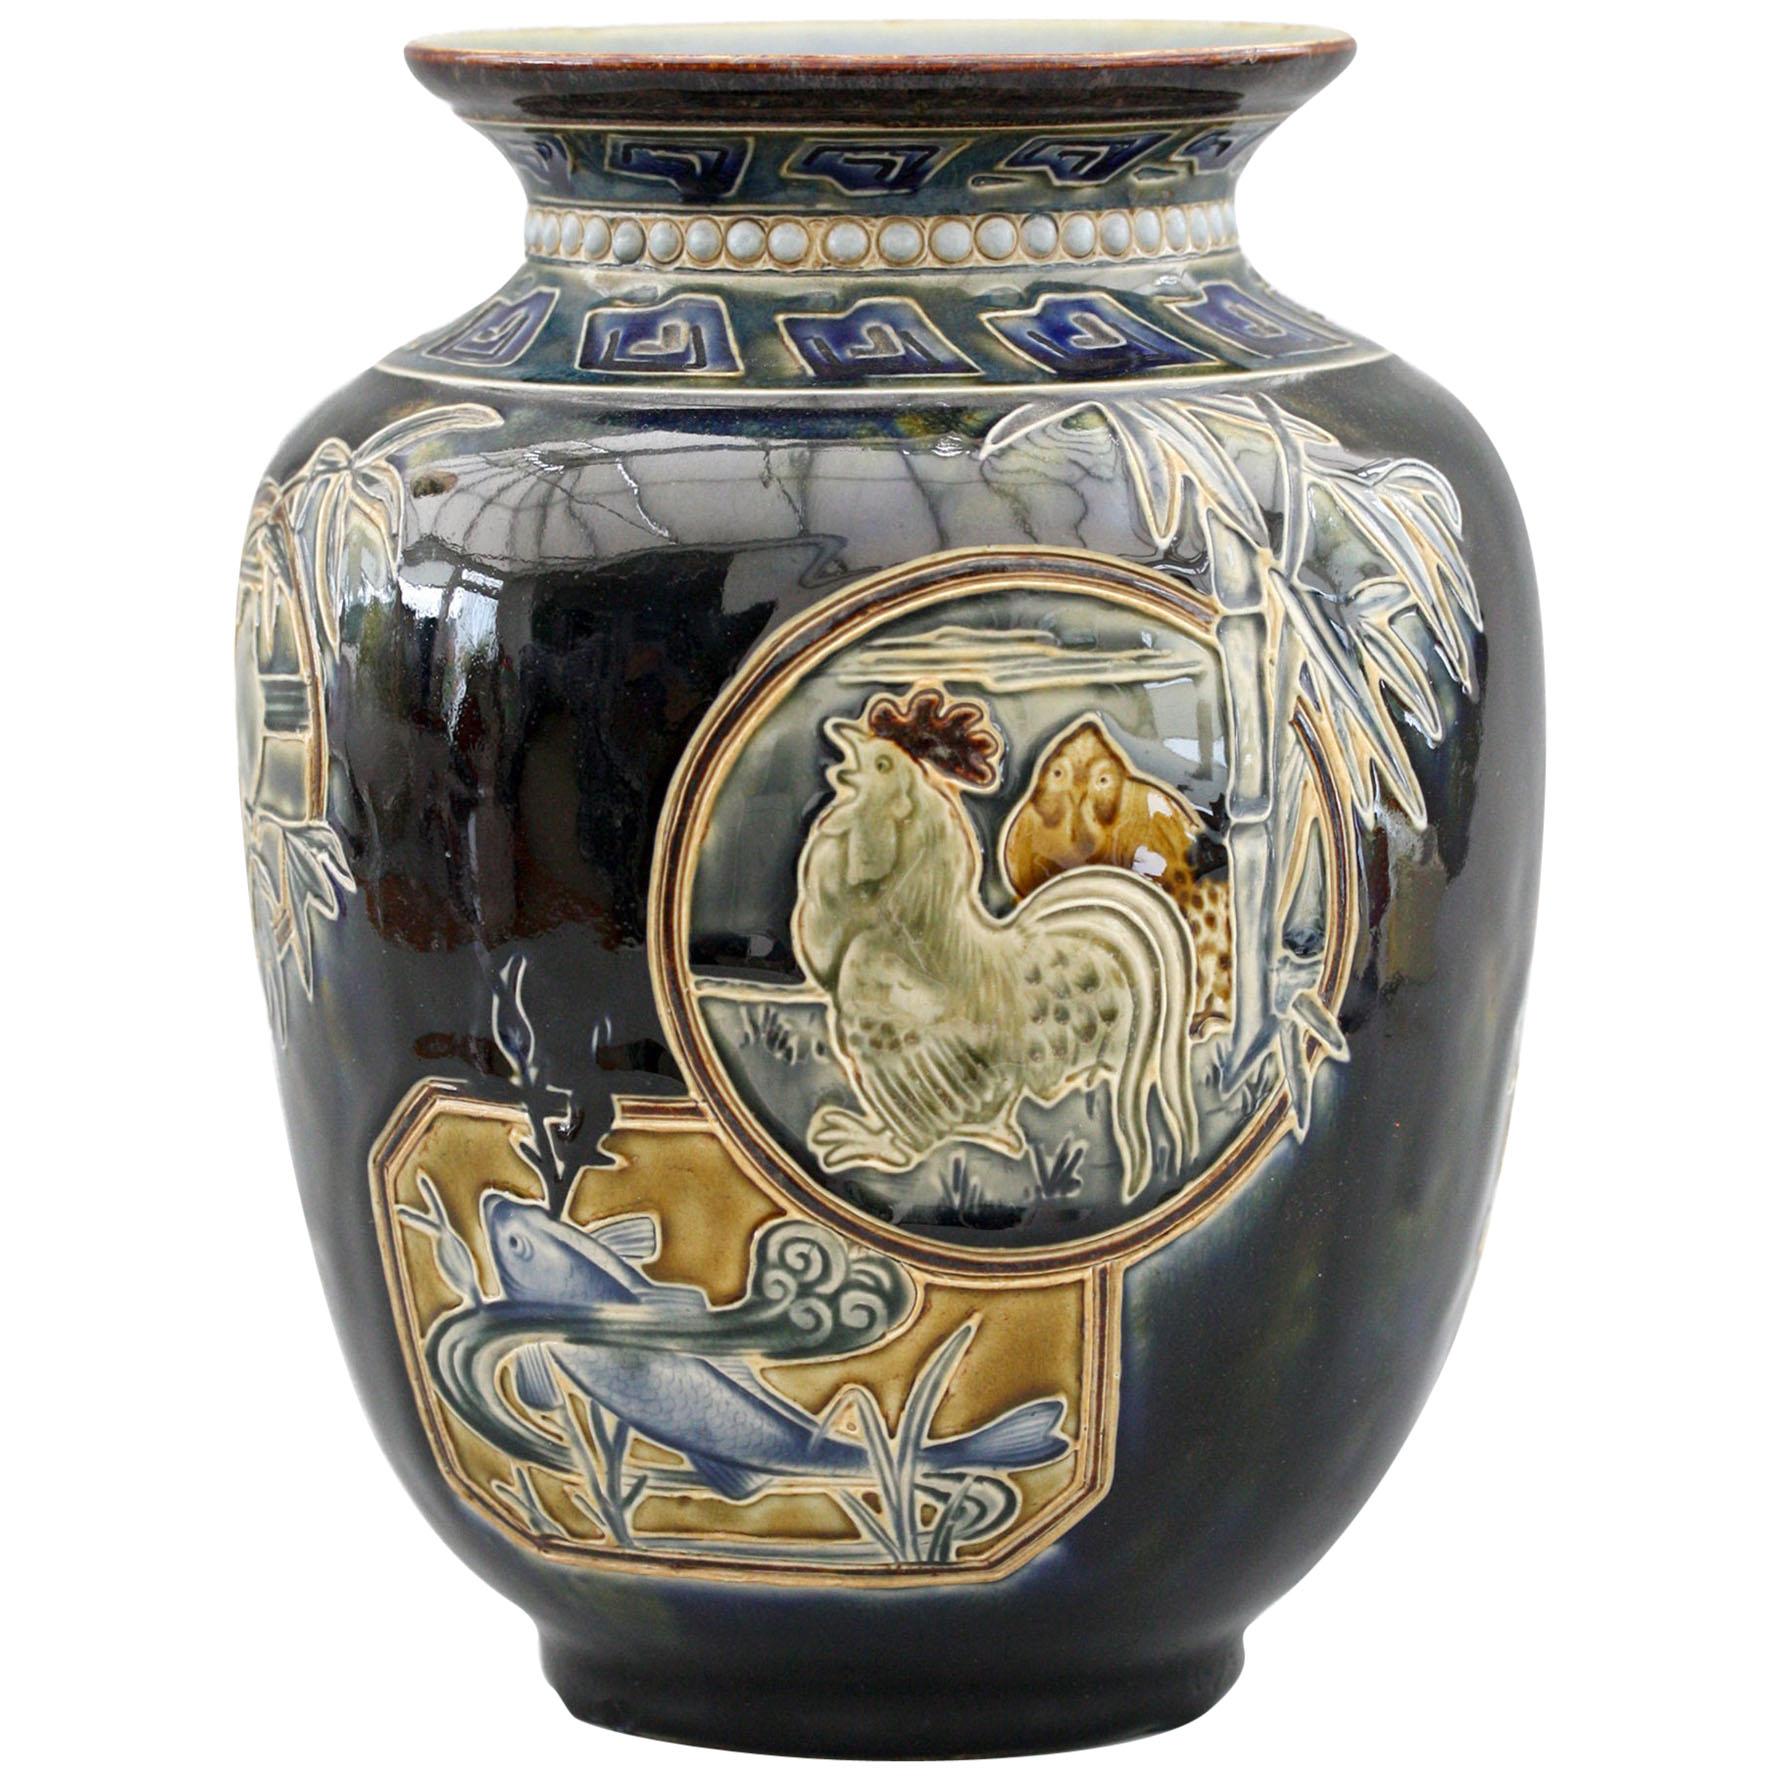 Doulton Lambeth Edward Dunn & John Broad Japanese Styled Art Pottery Vase